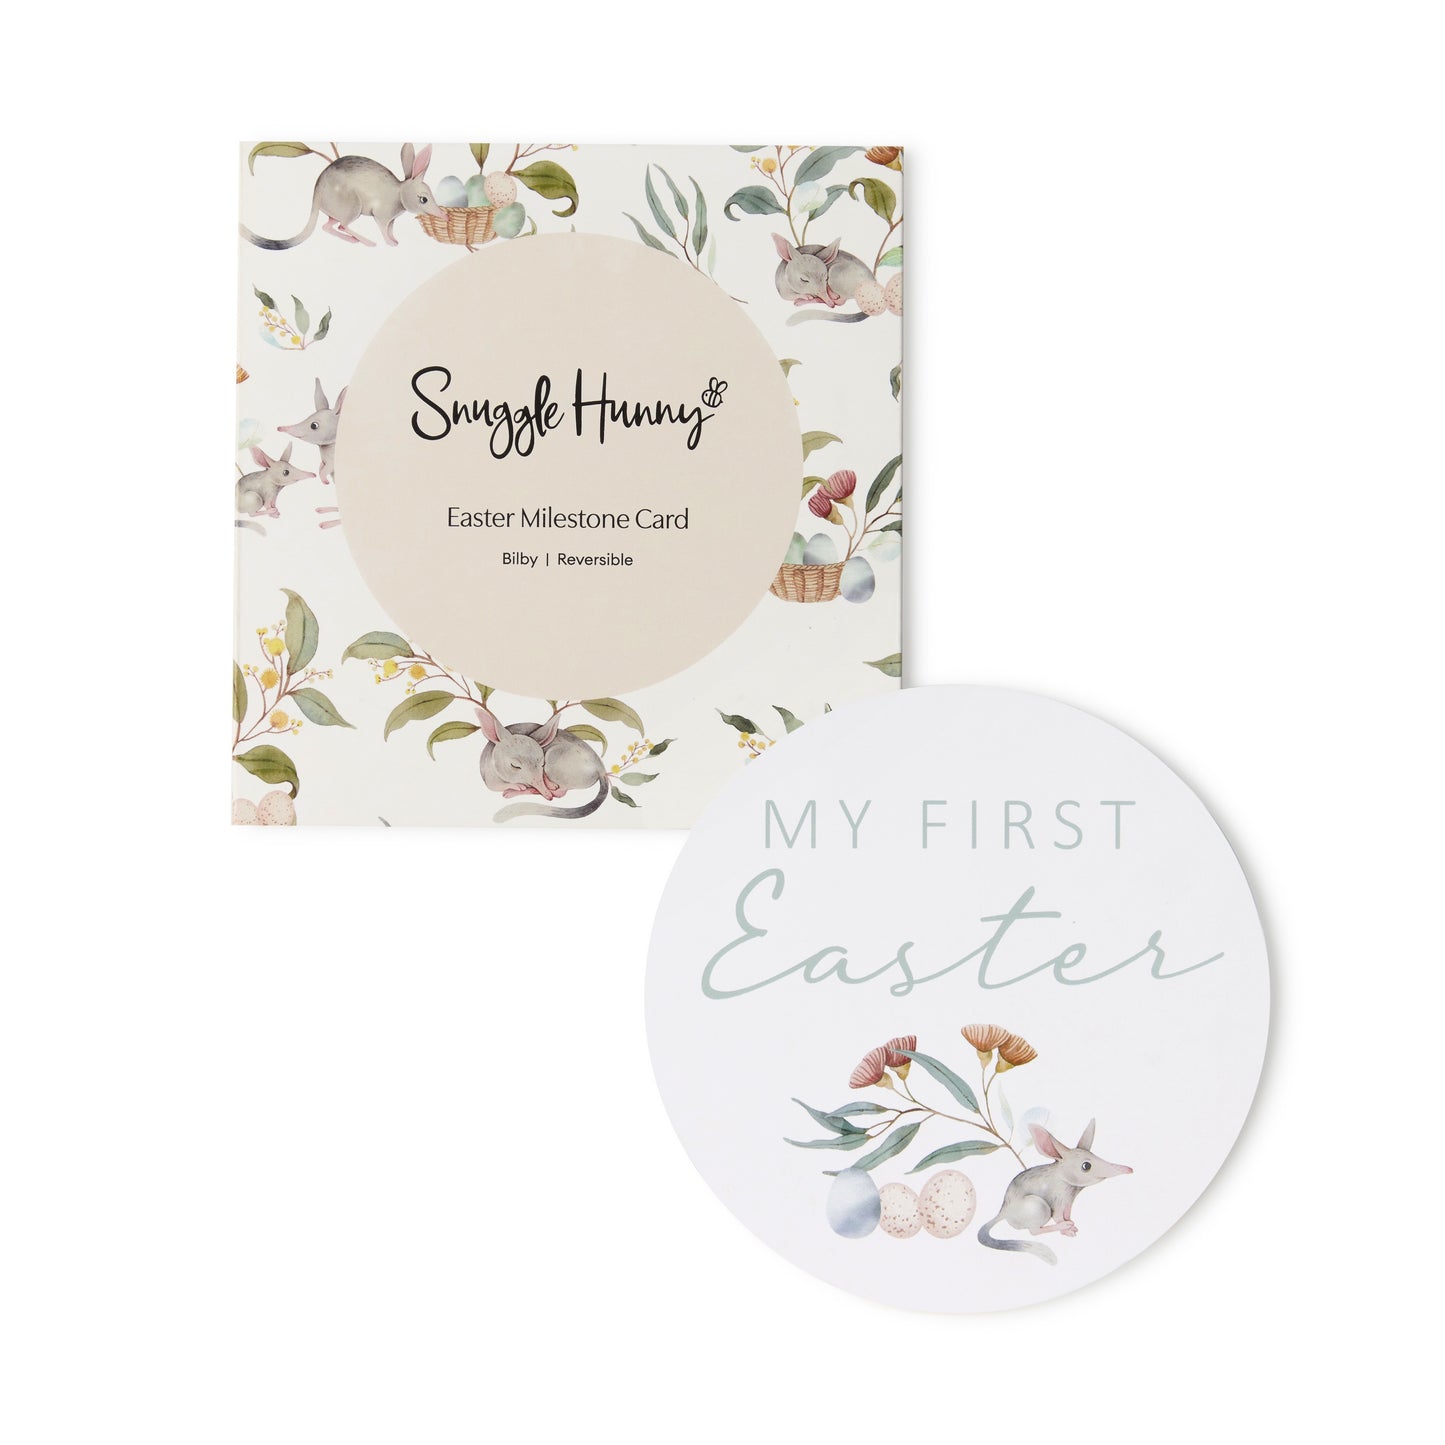 Easter Bilby Reversible single Milestone Card